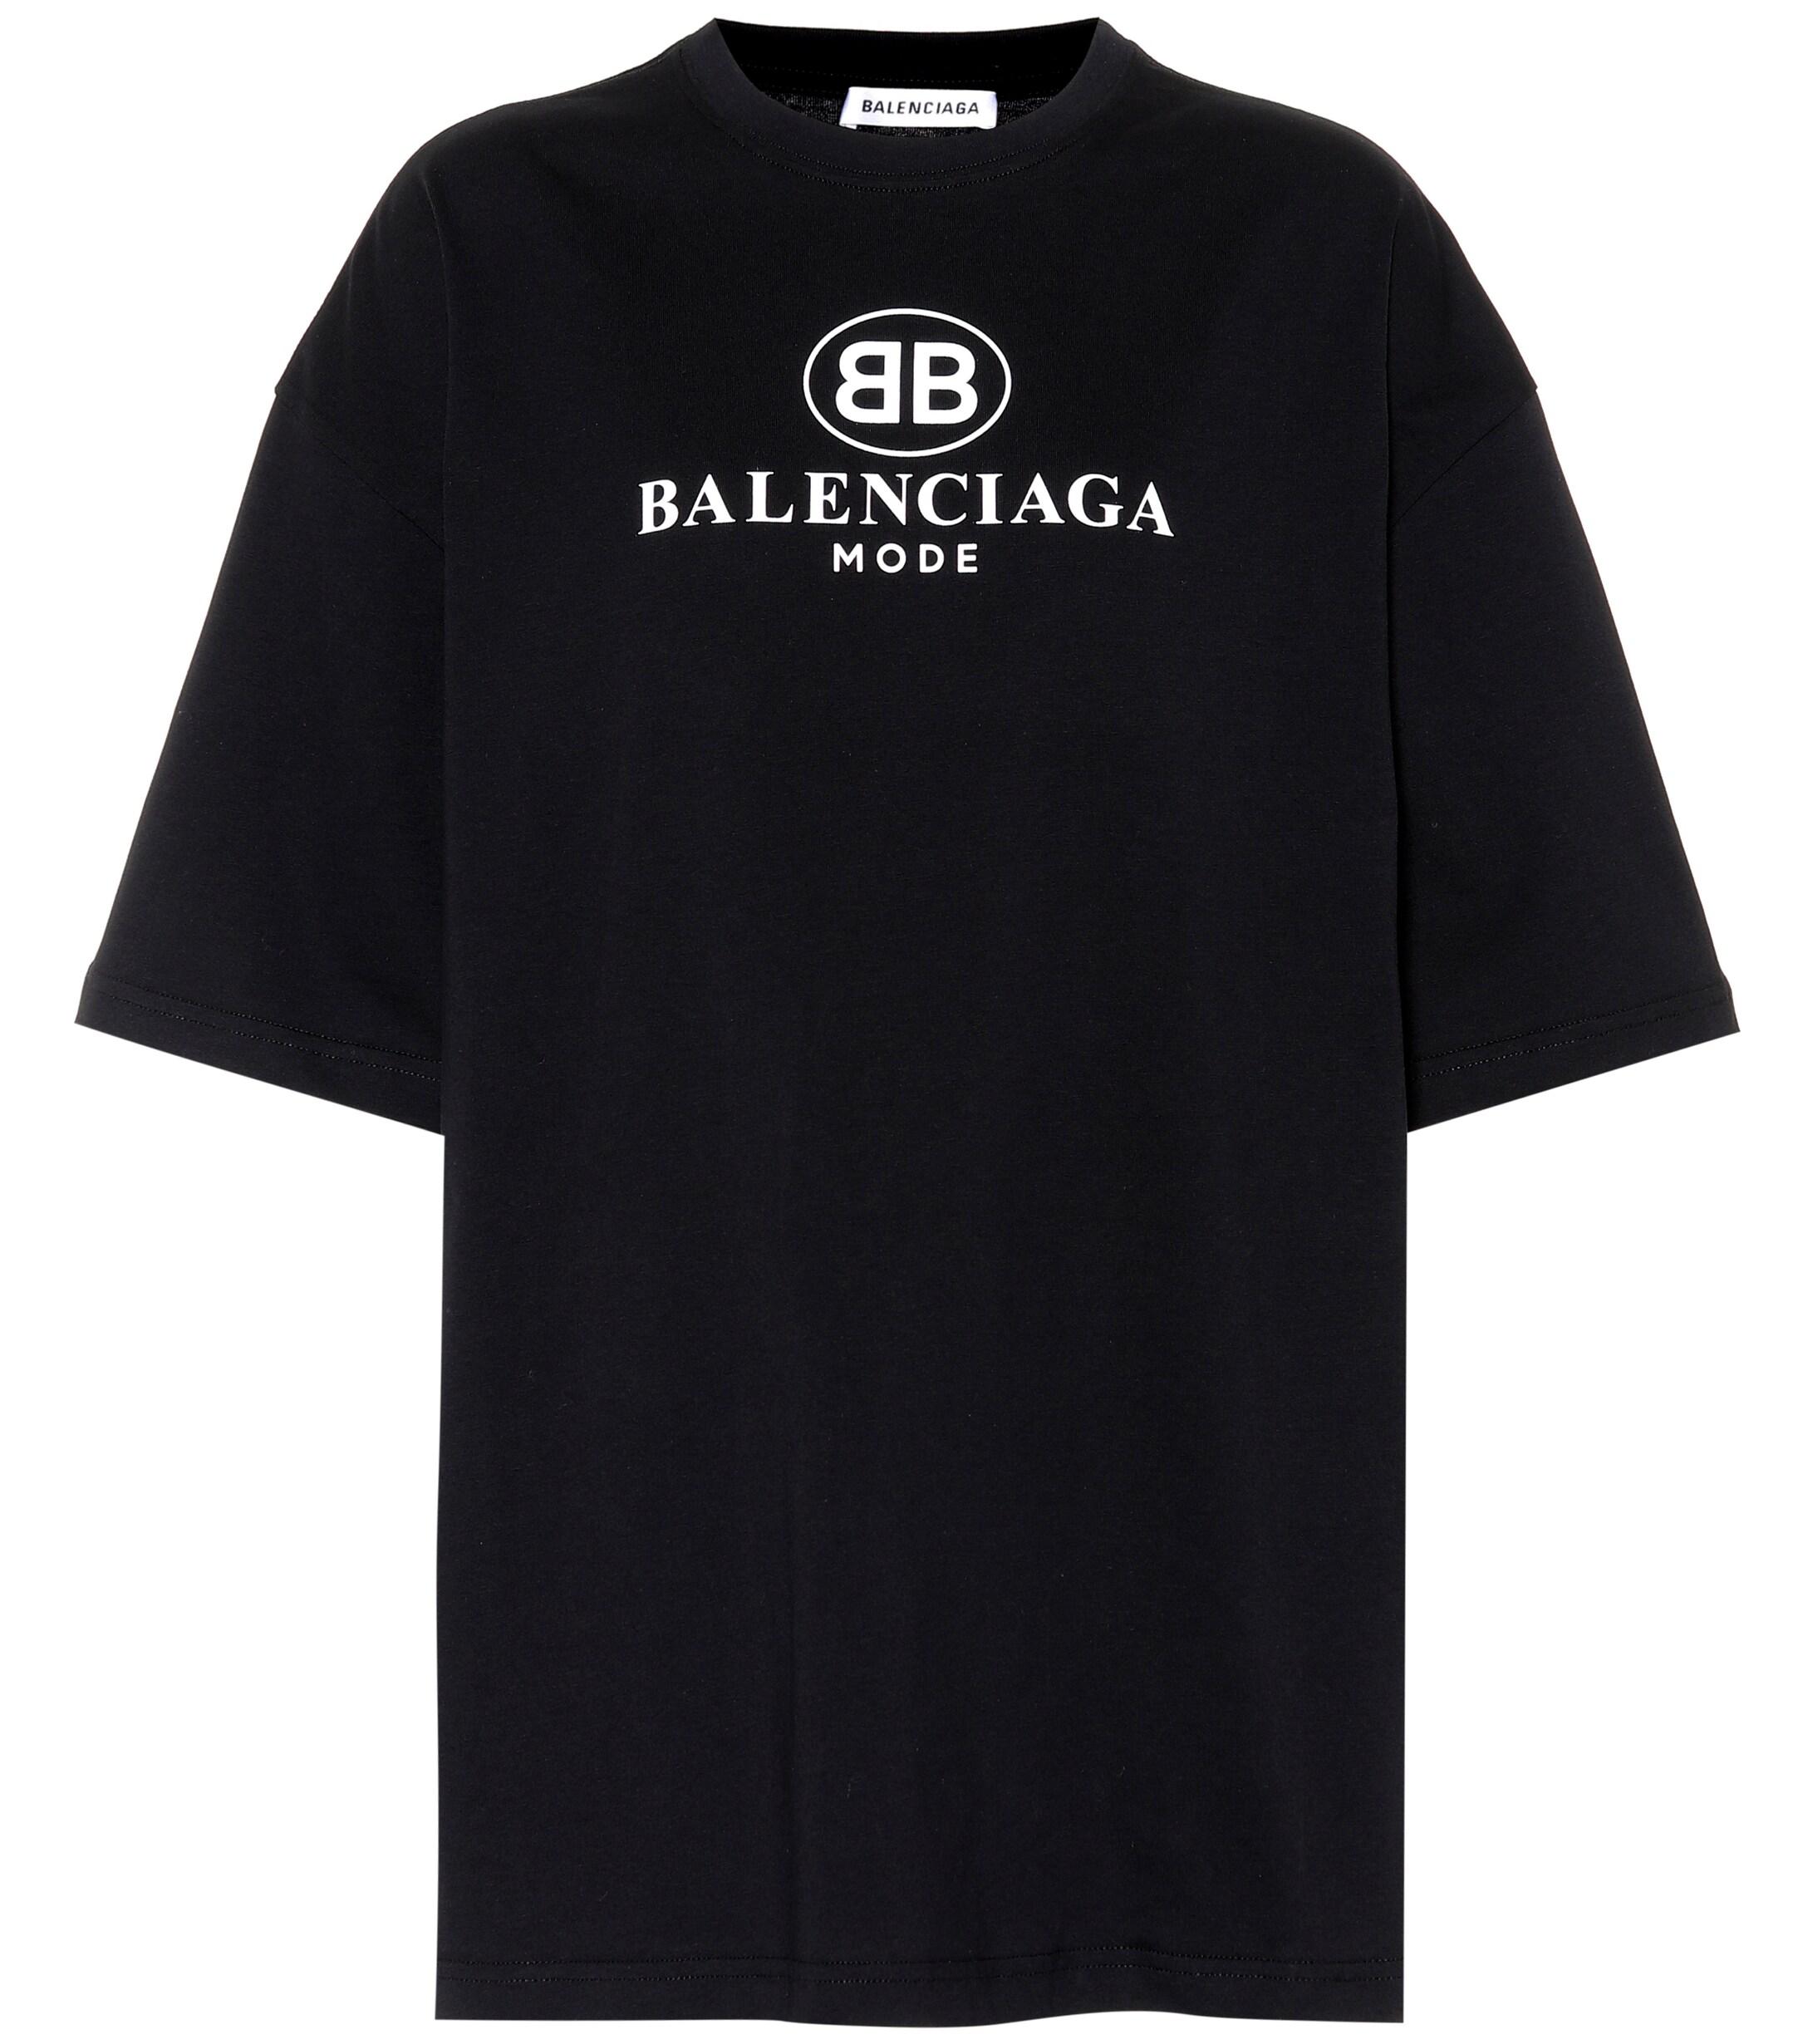 Balenciaga Bb Mode Cotton T-shirt in Black - Lyst